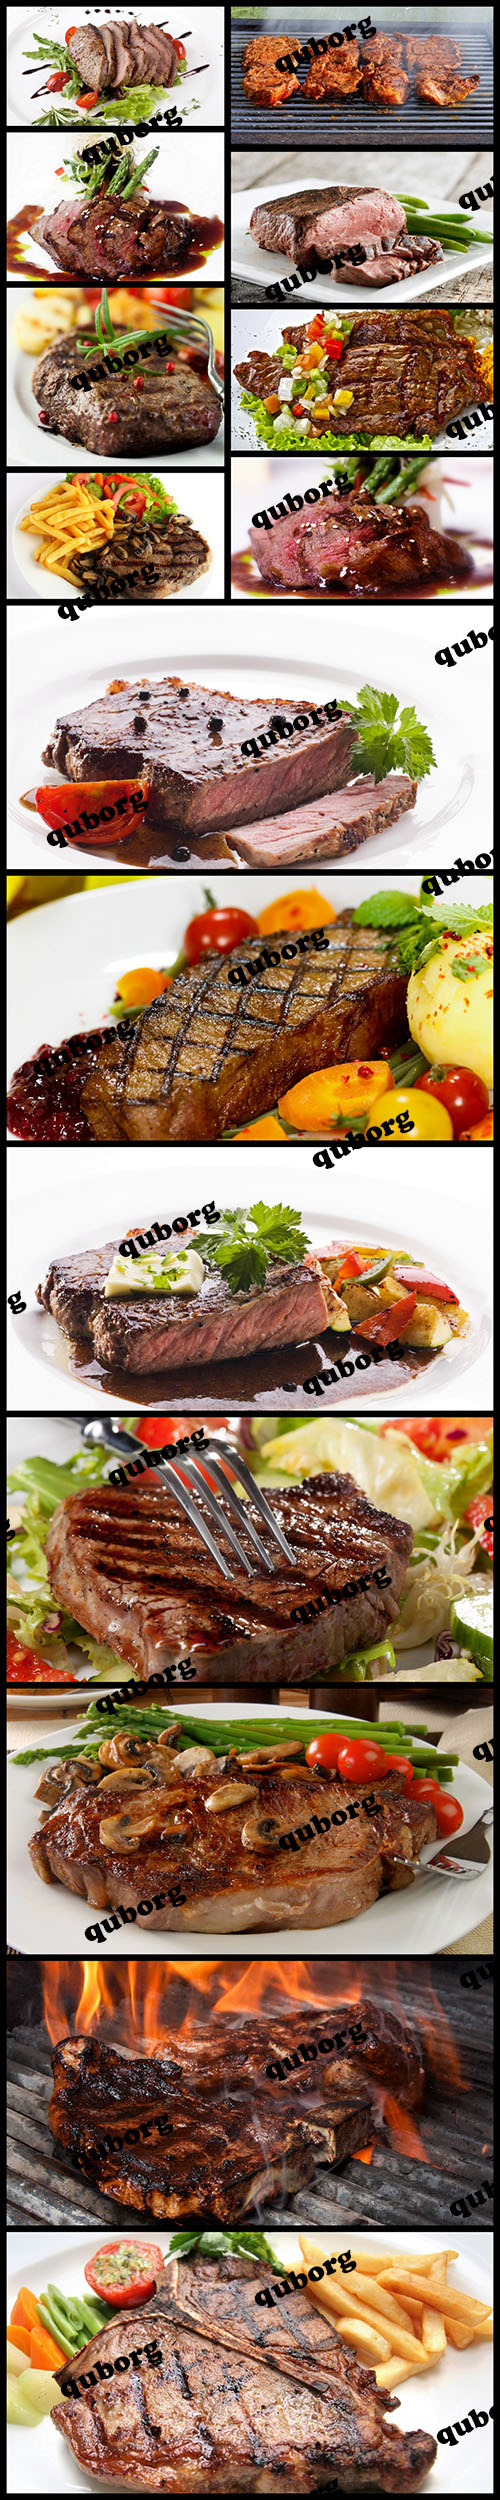 Stock Photos - Steak